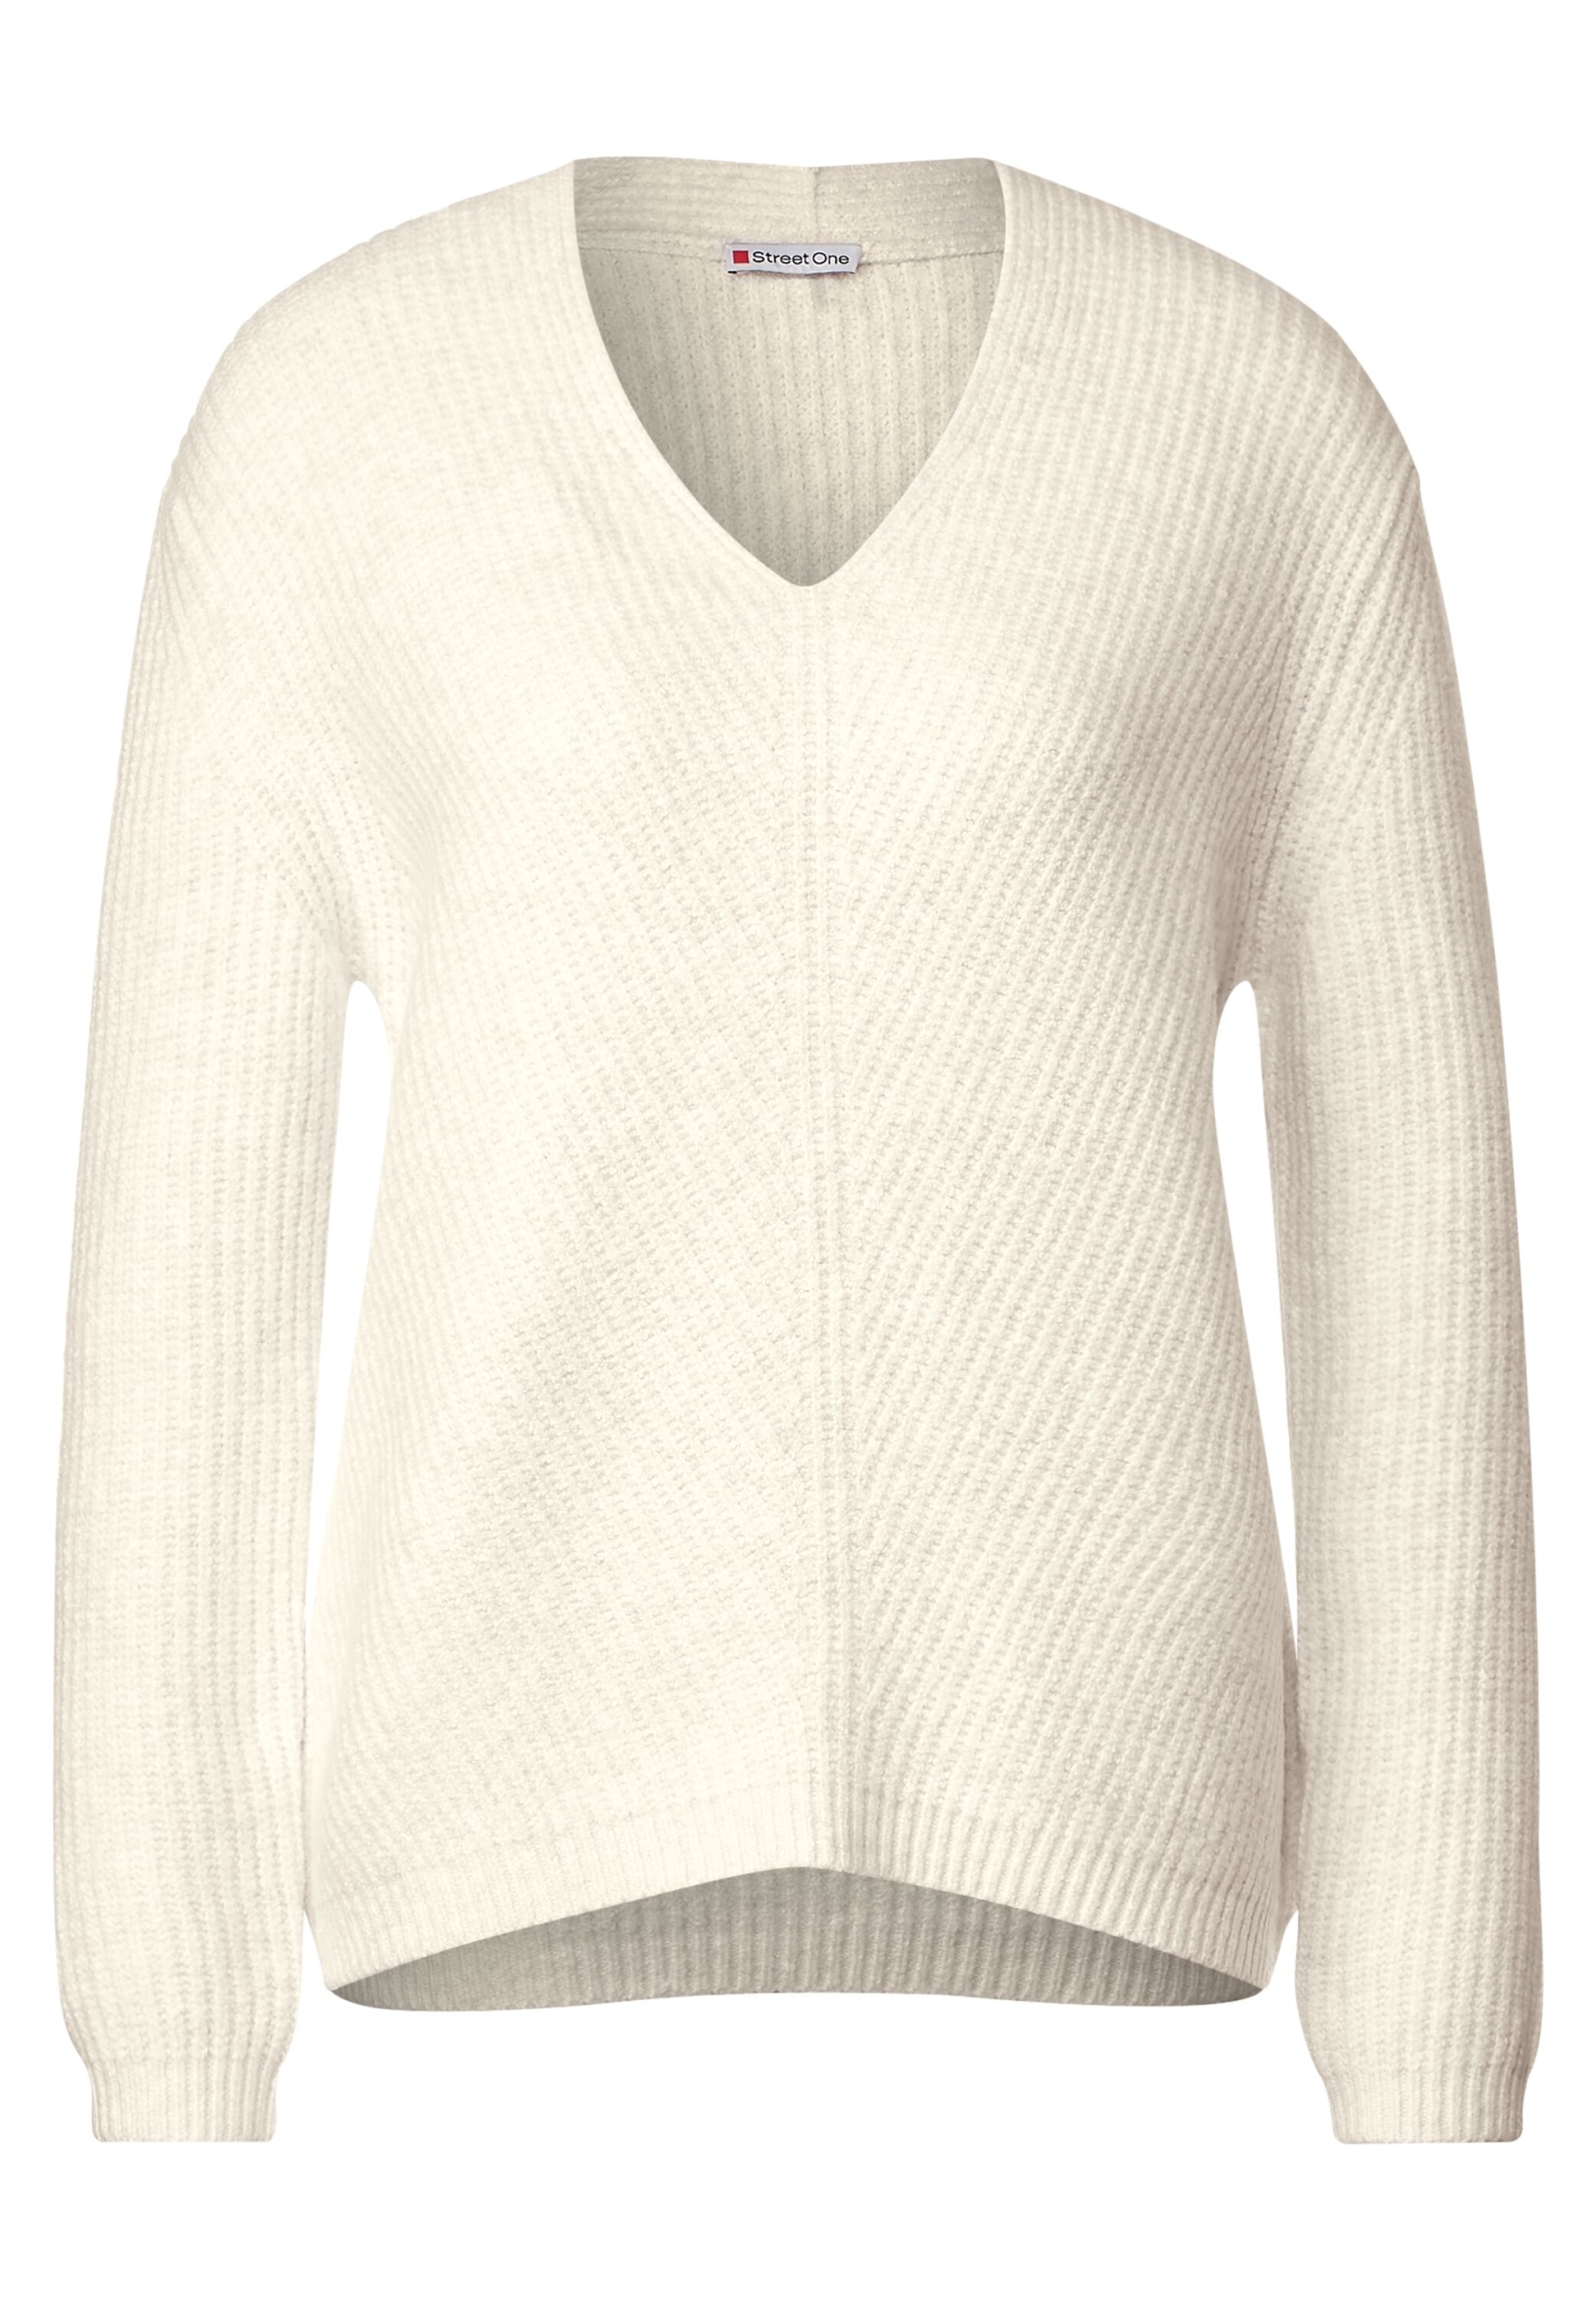 34 A302538-14959-34 QR | | | sweater cream melange white v-neck LTD